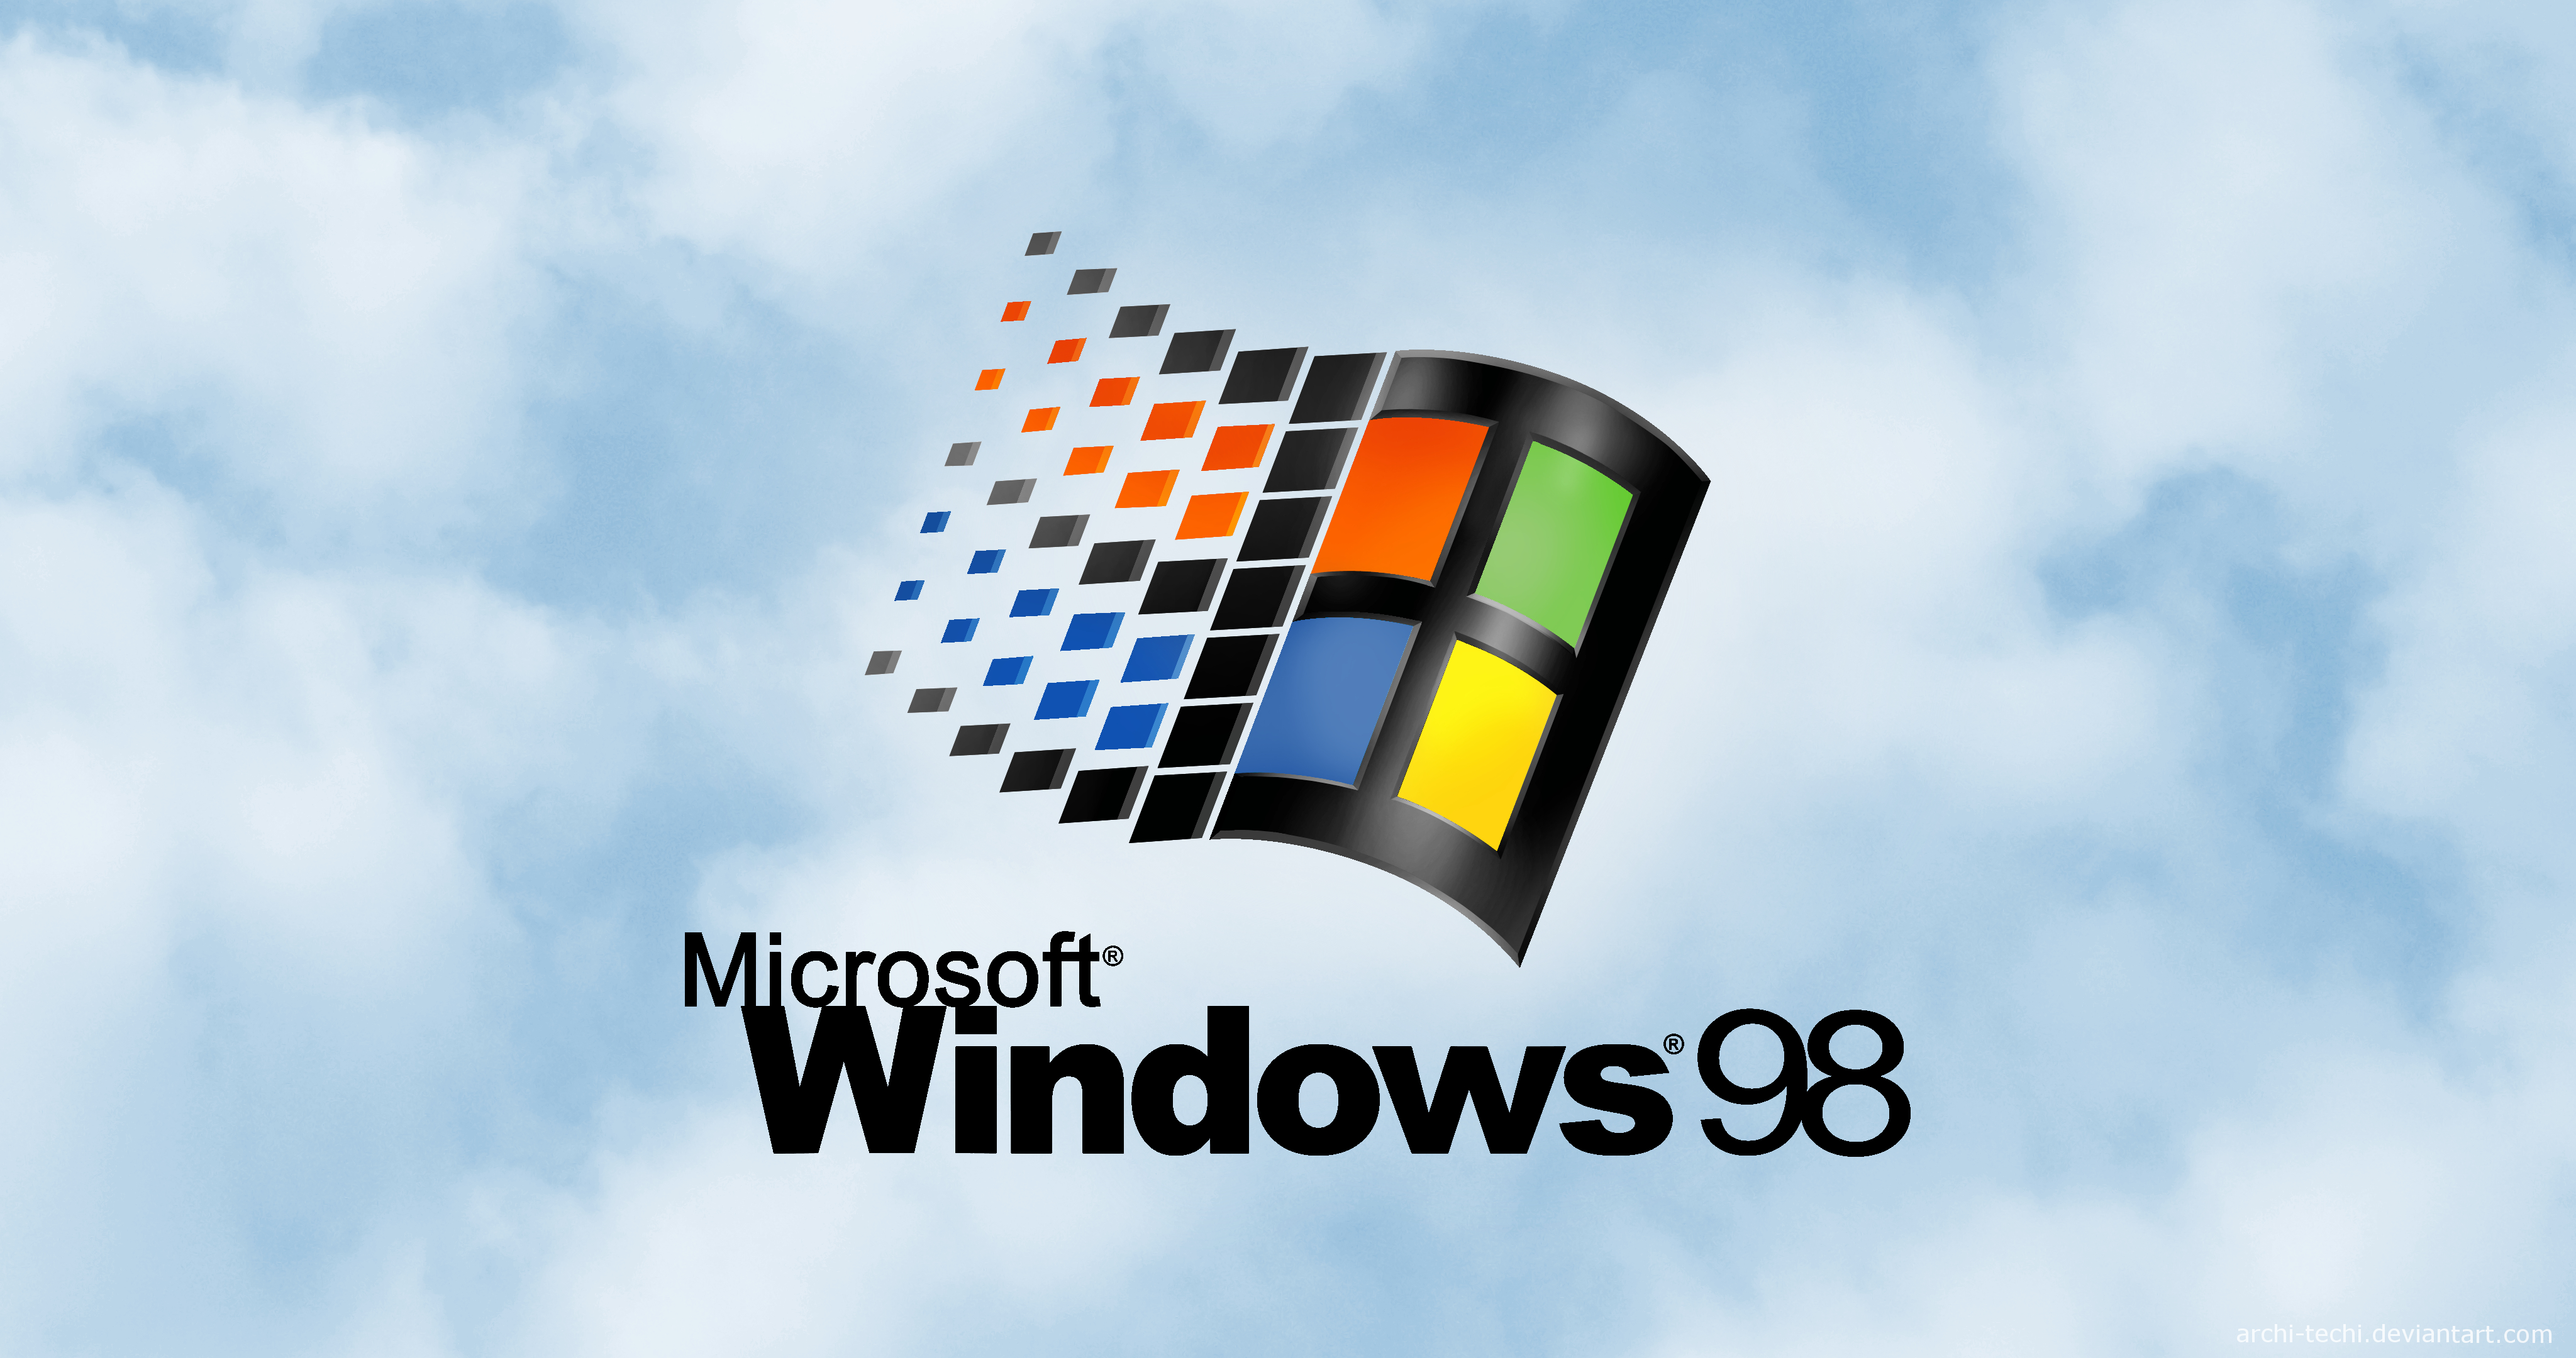 Windows 98 Remastered Startup Screen 4k Wallpaper By Archi Techi On Deviantart